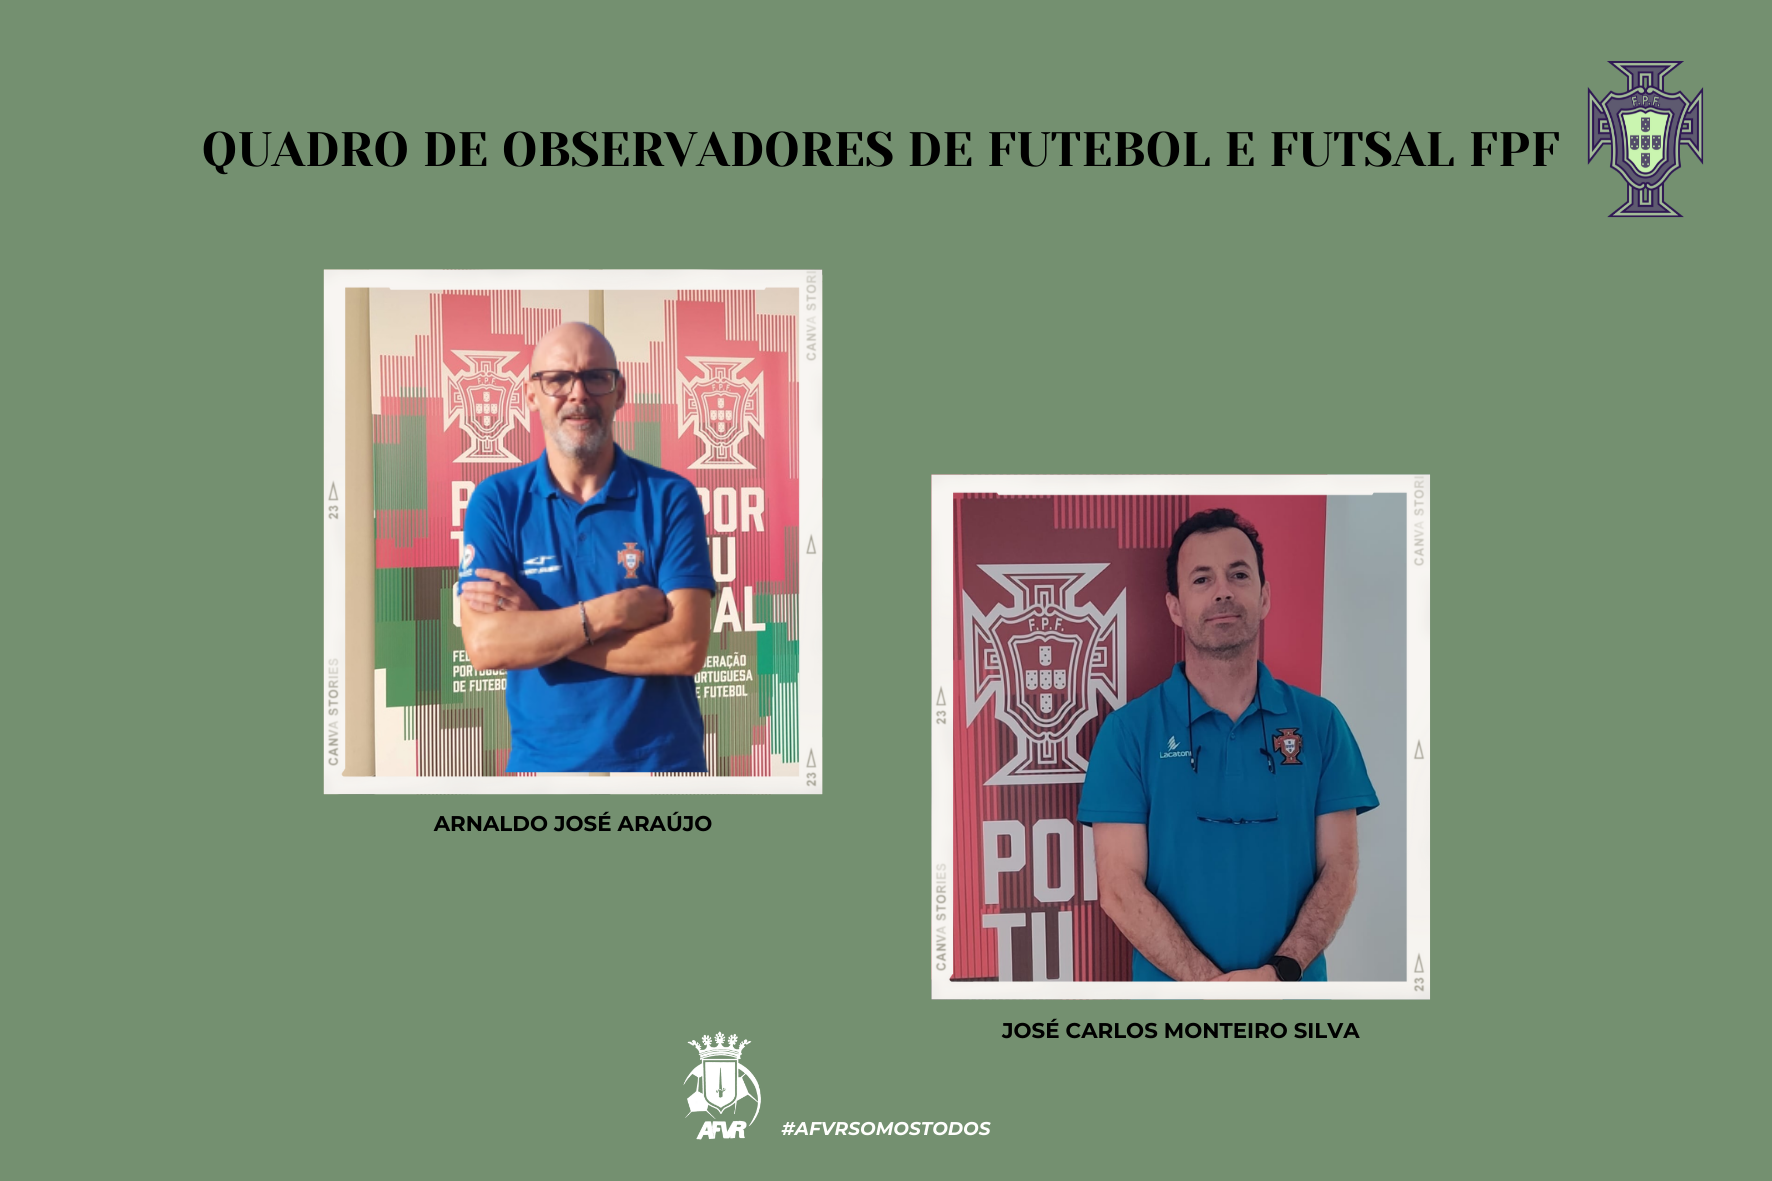 Quadro de Observadores de Futebol e Futsal da FPF